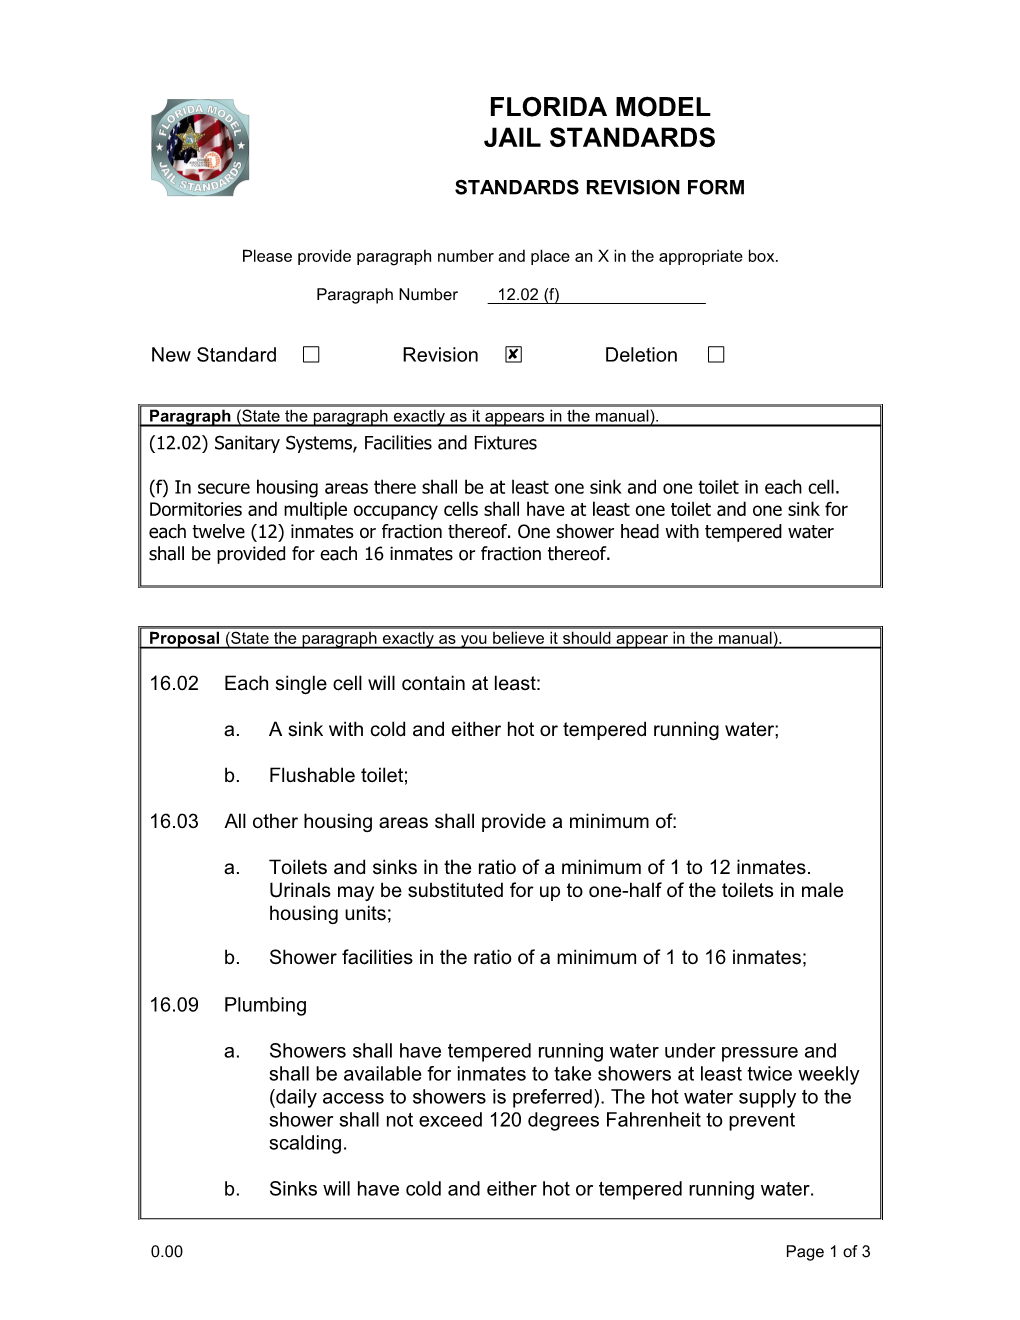 FMJS Revision Form s1